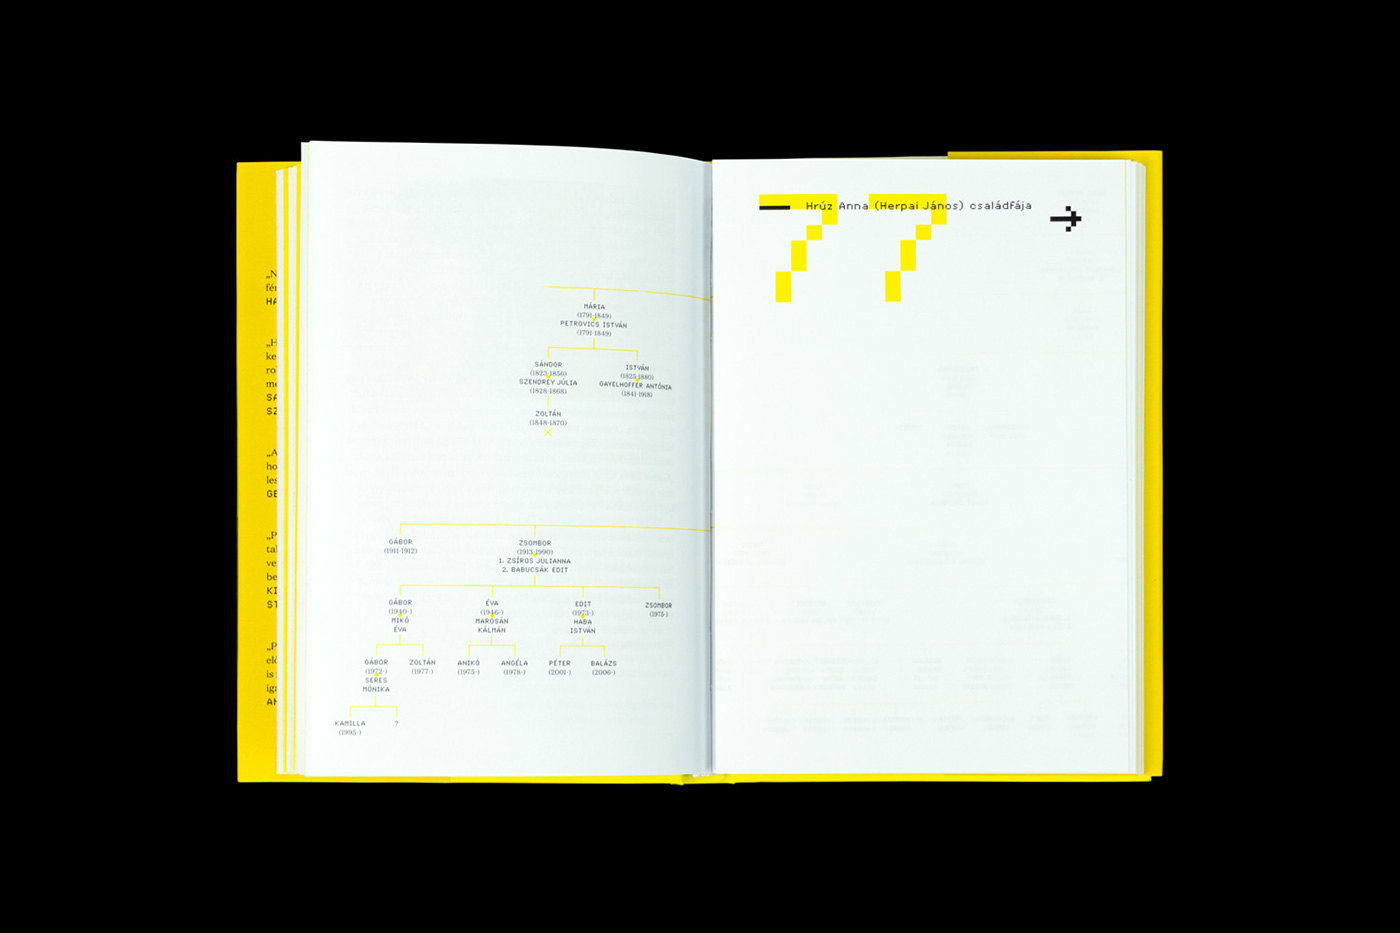 book pixel typography   Diecut black yellow petőfi photograph foldout hardcover